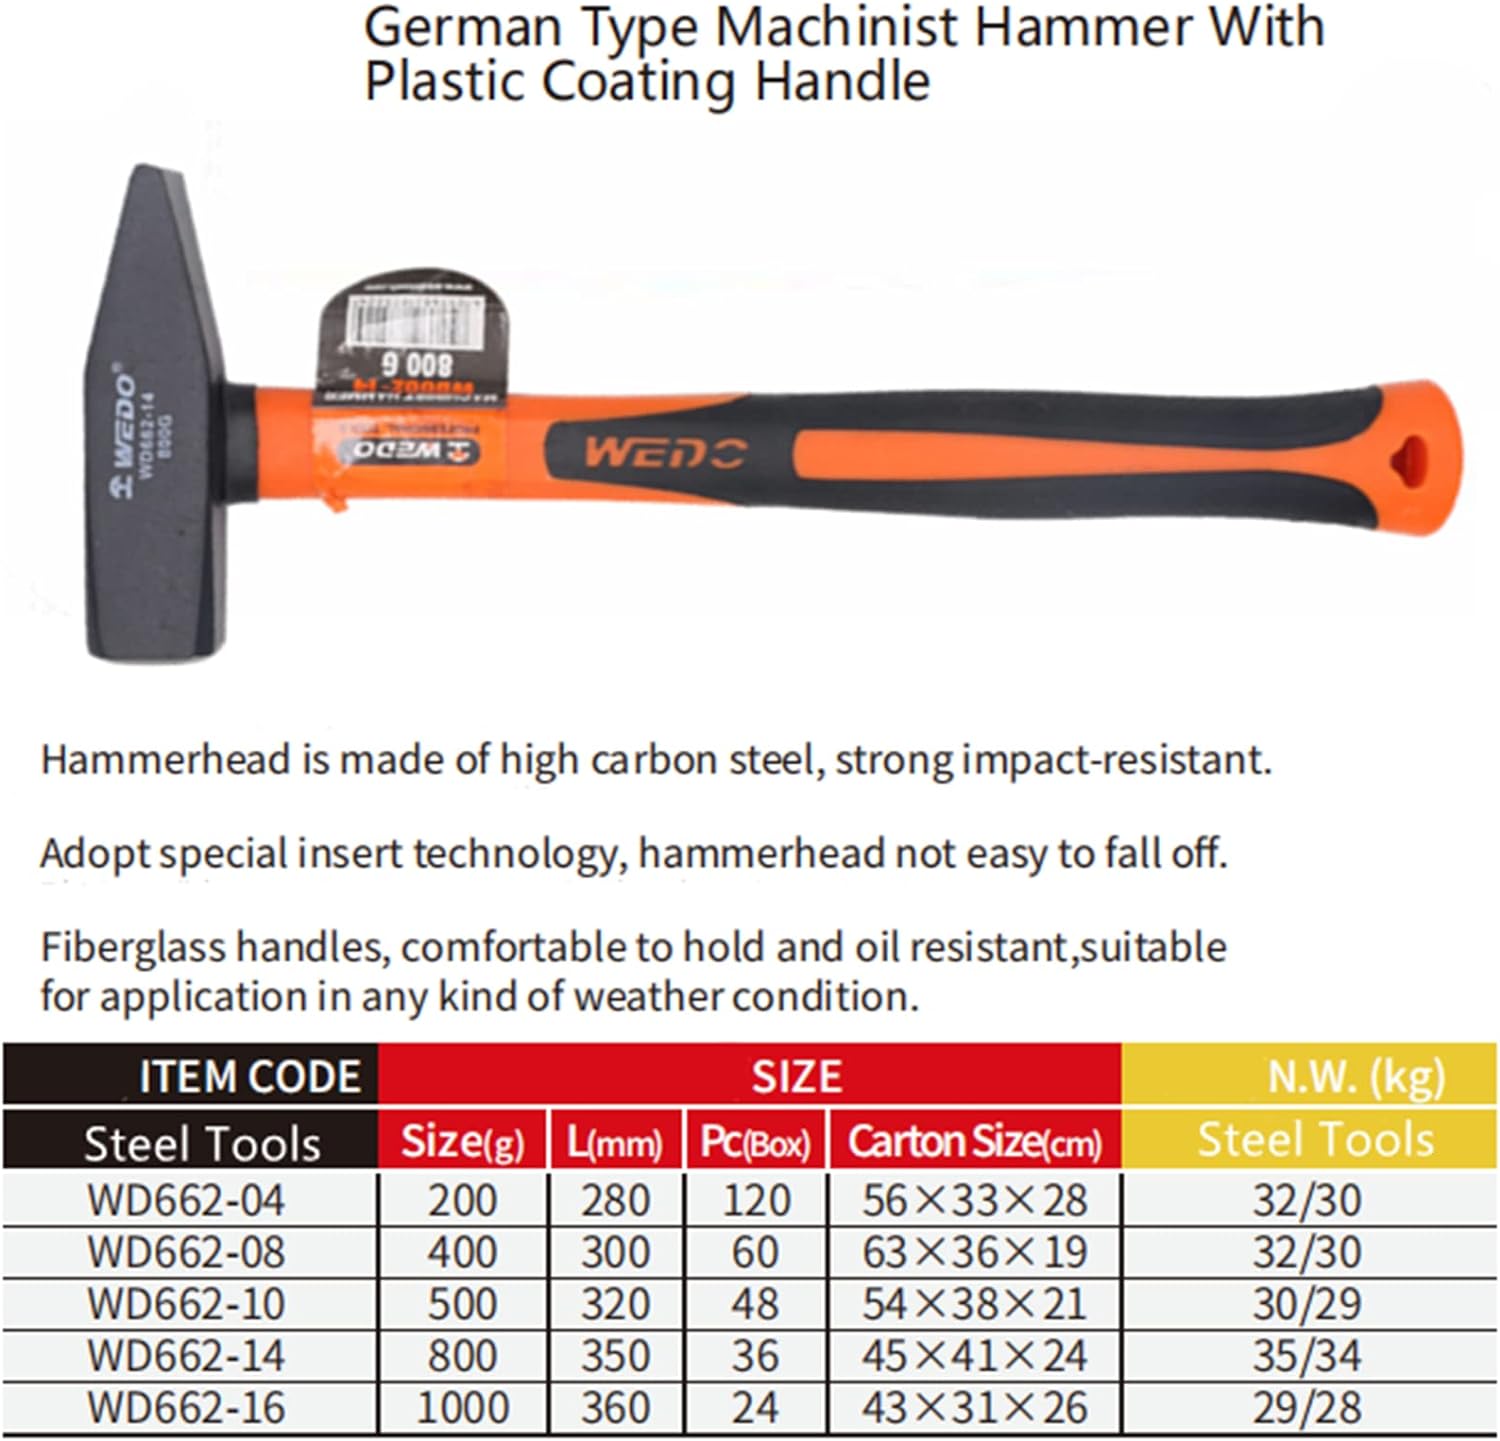 WEDO Machinist Hammer with Fiberglass Handle, Blacksmith Strike Hammer, Cross Pein Hammer, High Carbon Steel, Impact-resistant, for